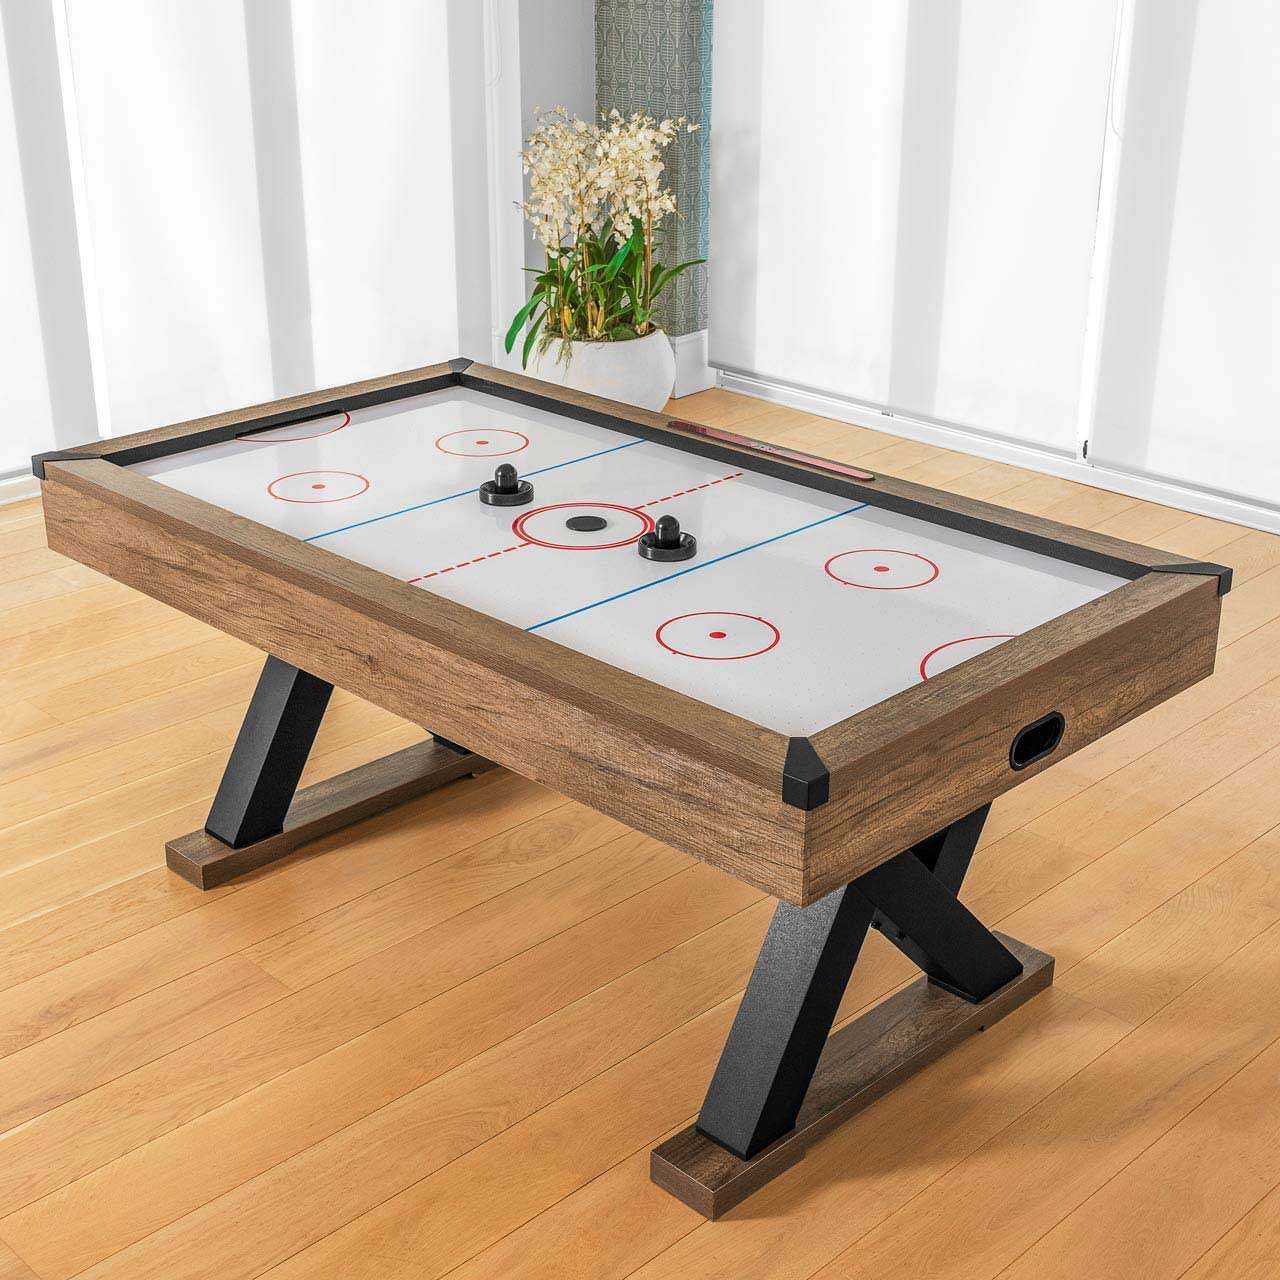 Wooden Air Hockey table